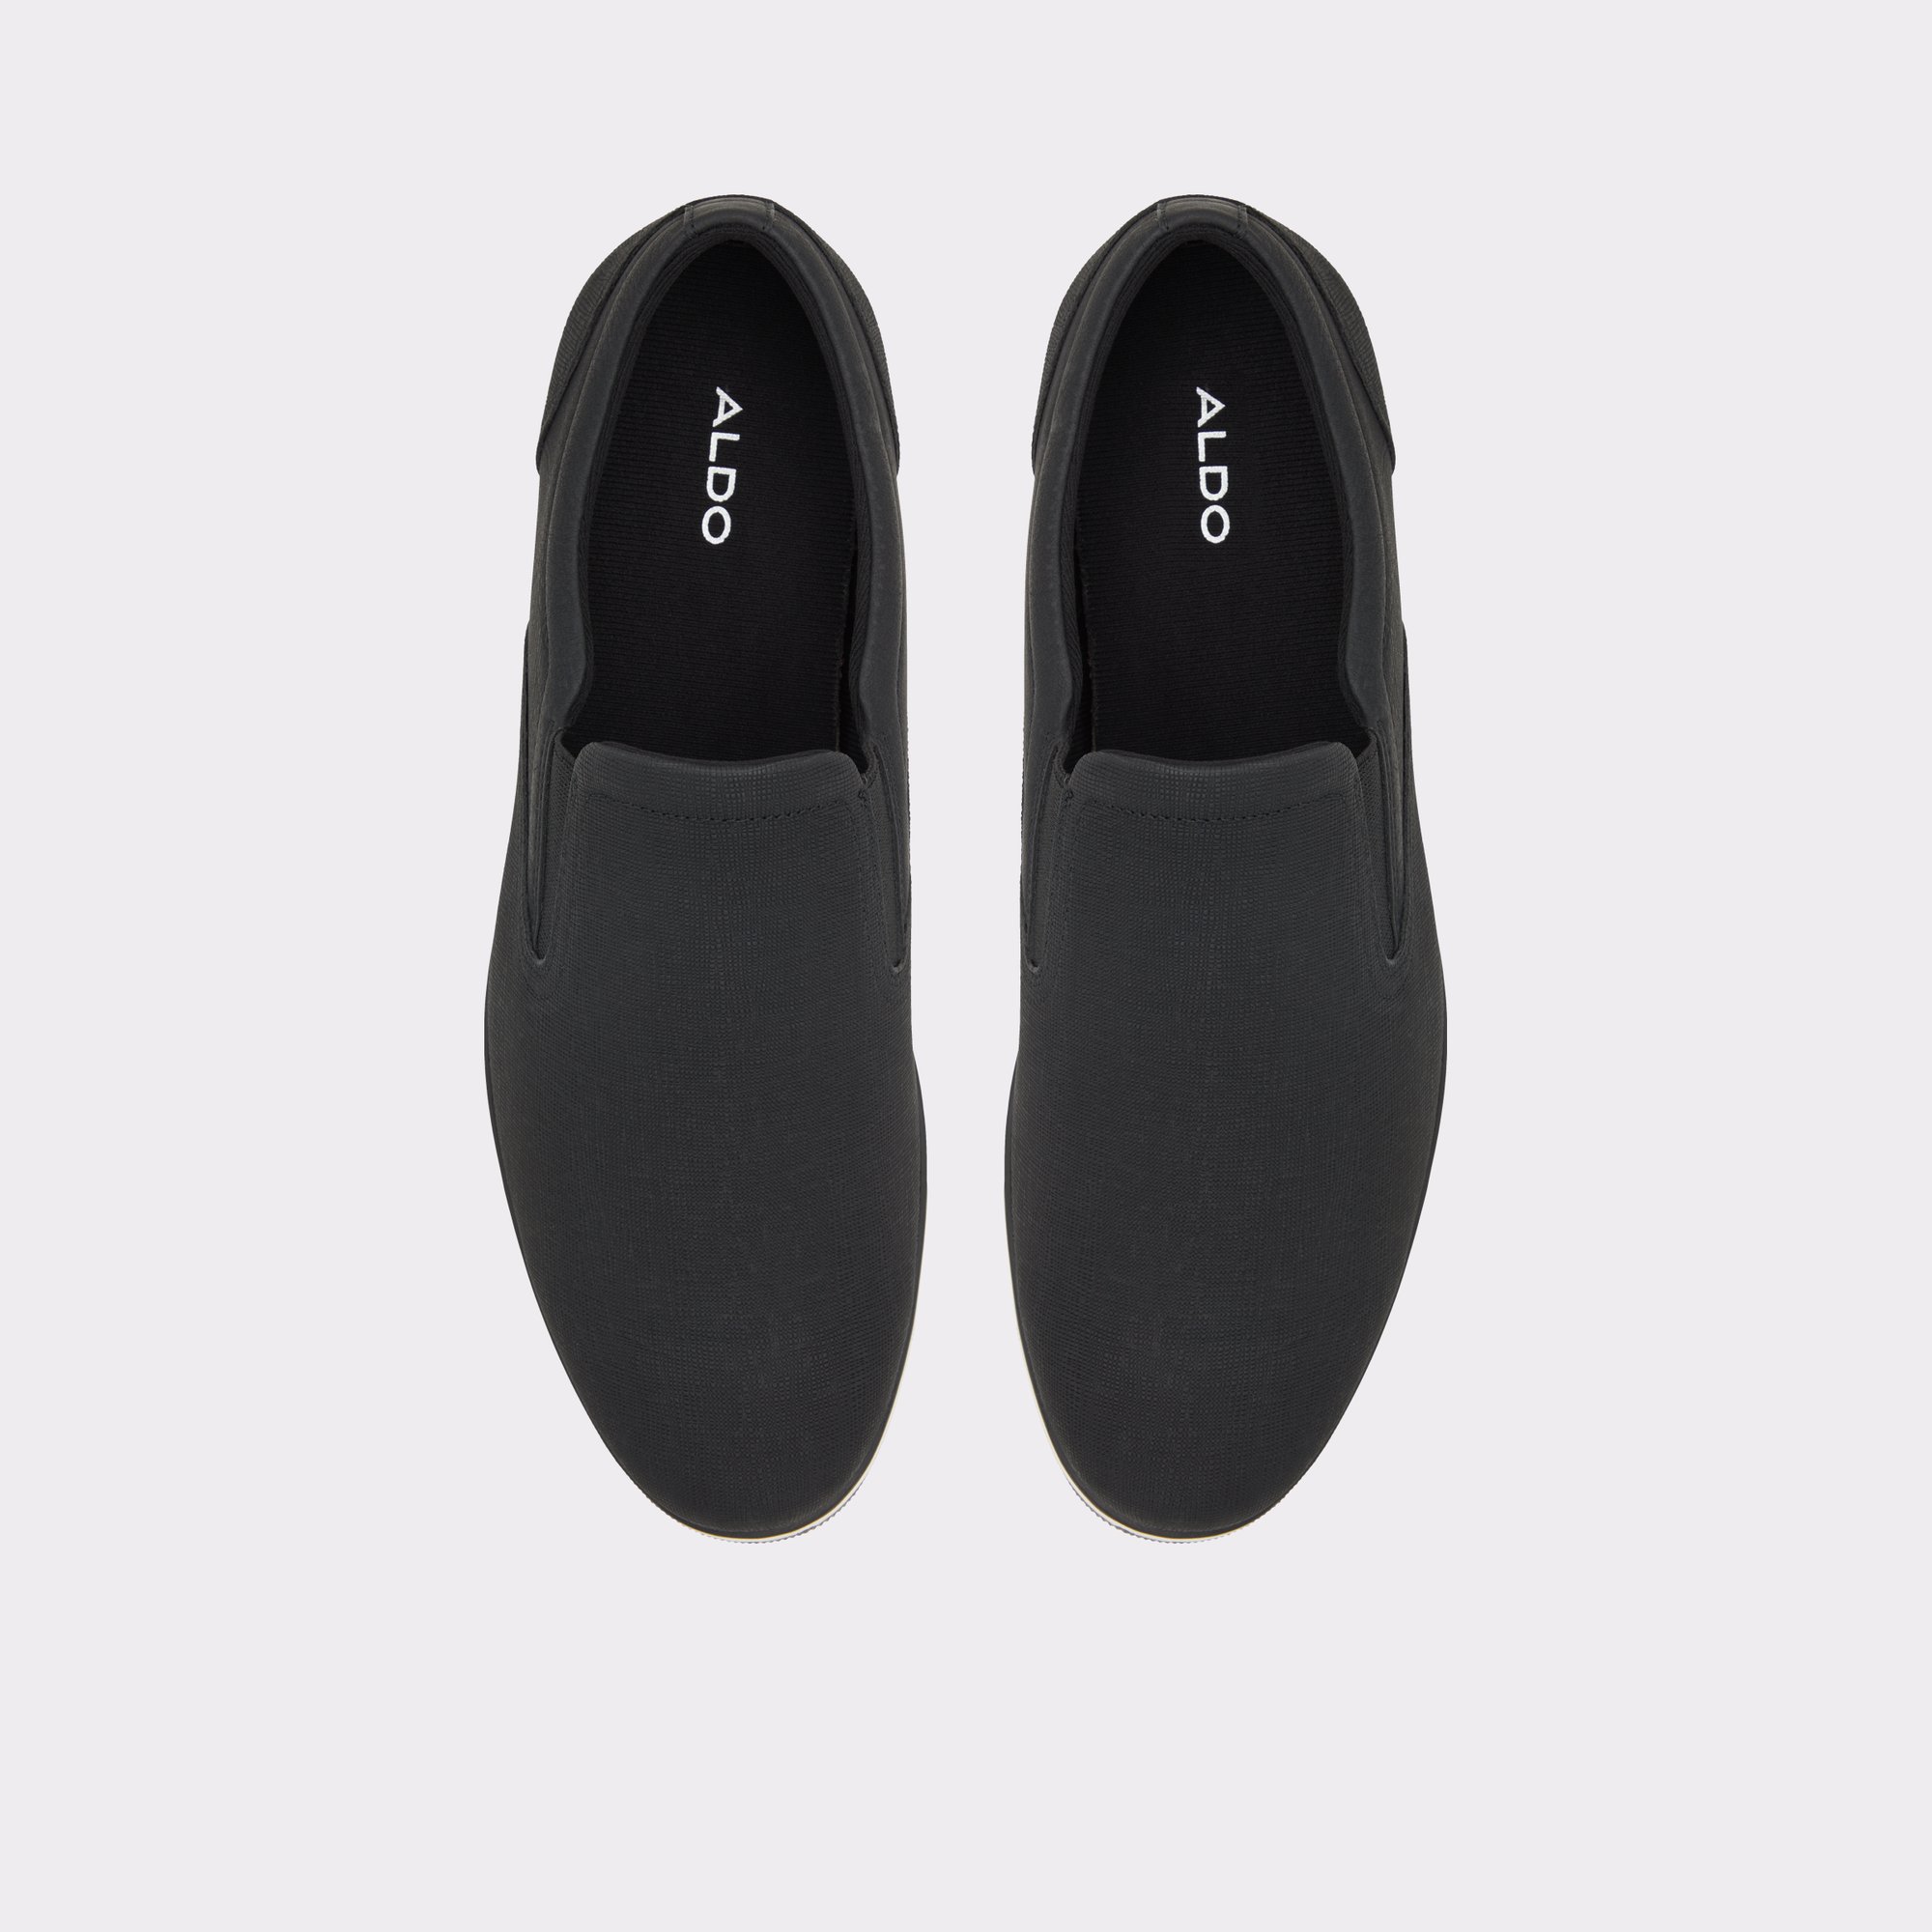 Braunbock Black Men's Casual Shoes | ALDO Canada